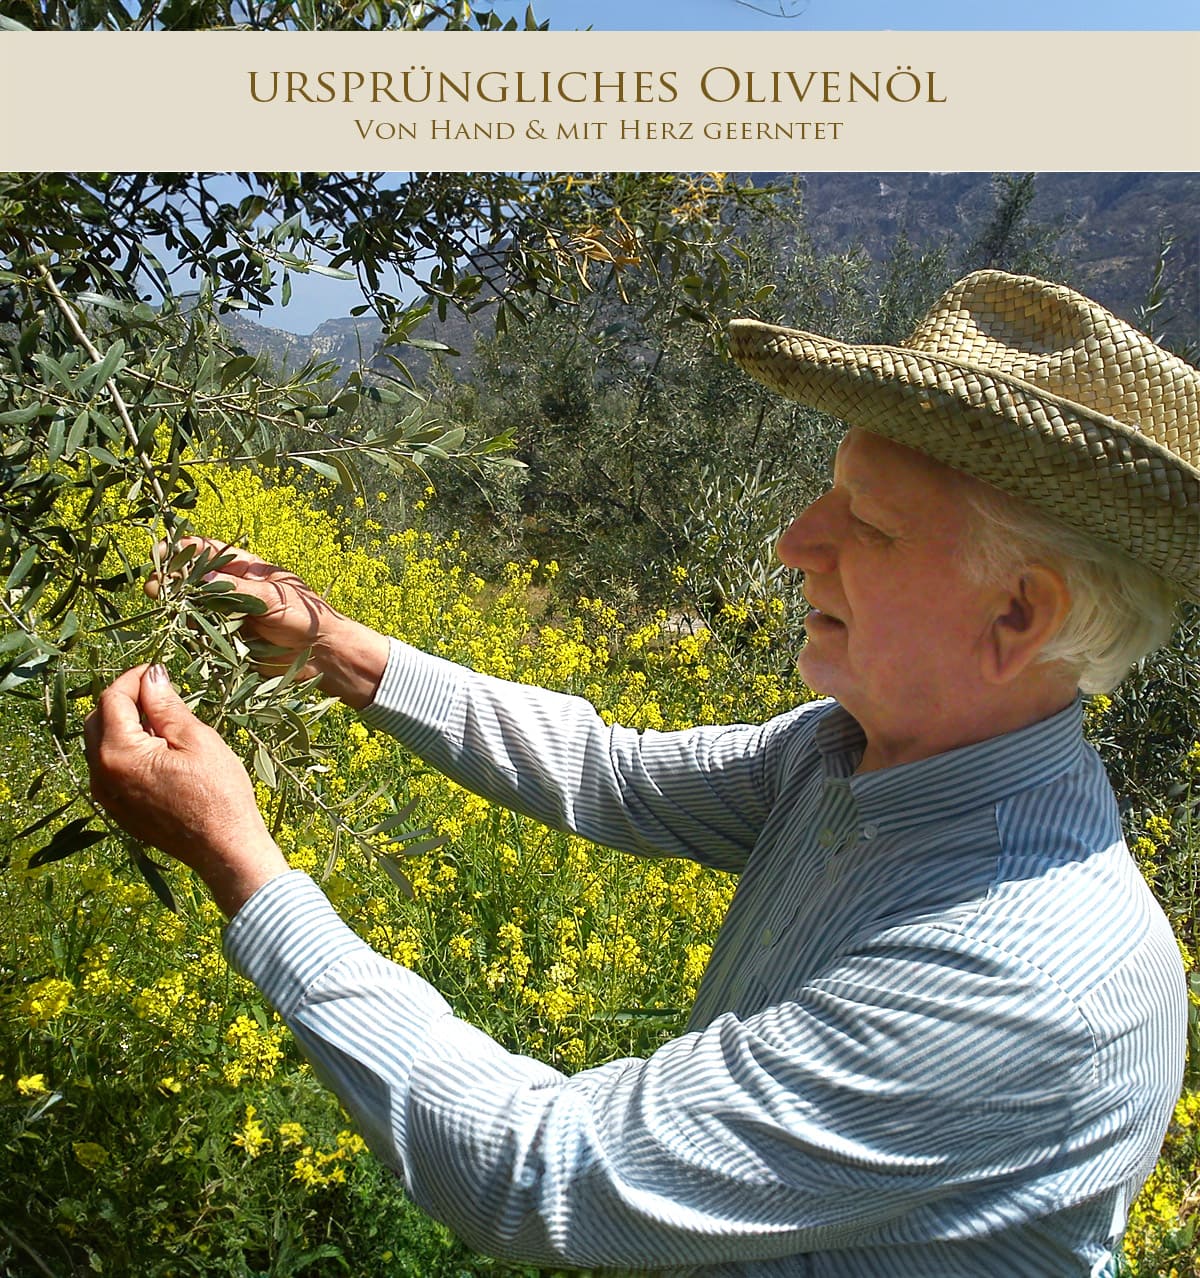 Olivenbaum Patenschaft Griechenland